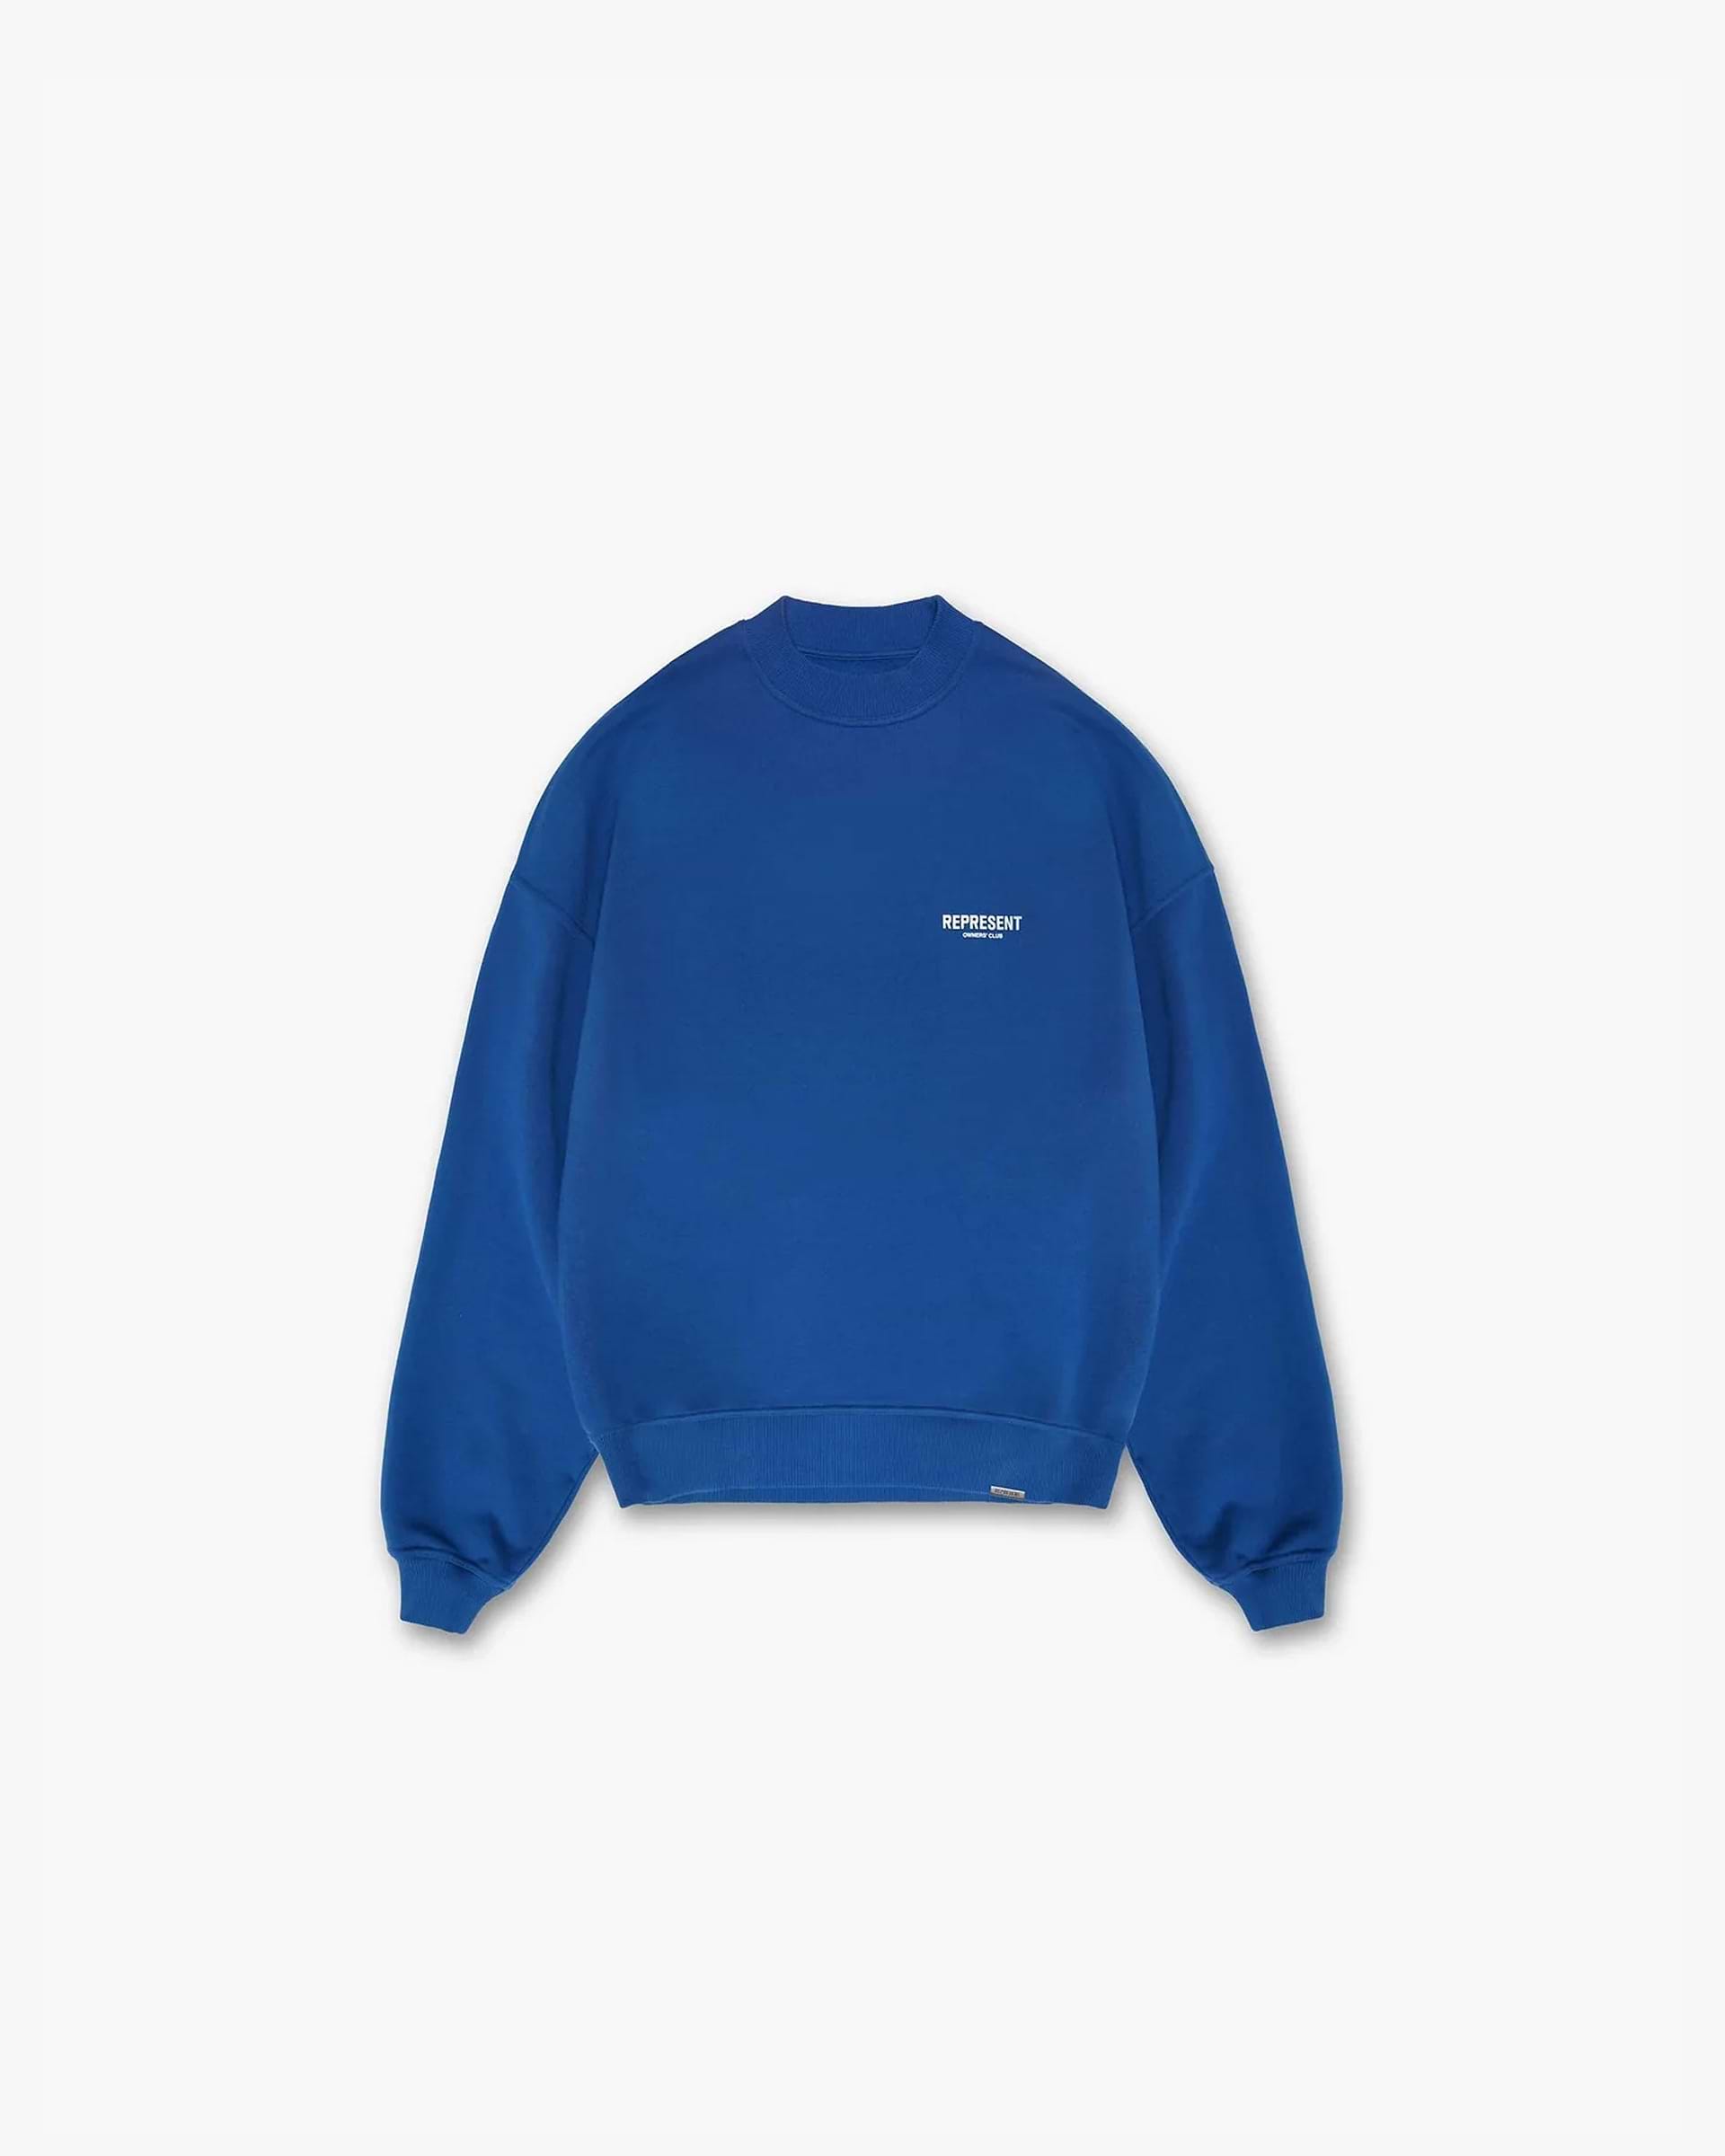 Represent Owners Club Sweater, Cobalt Sweaters, Represent